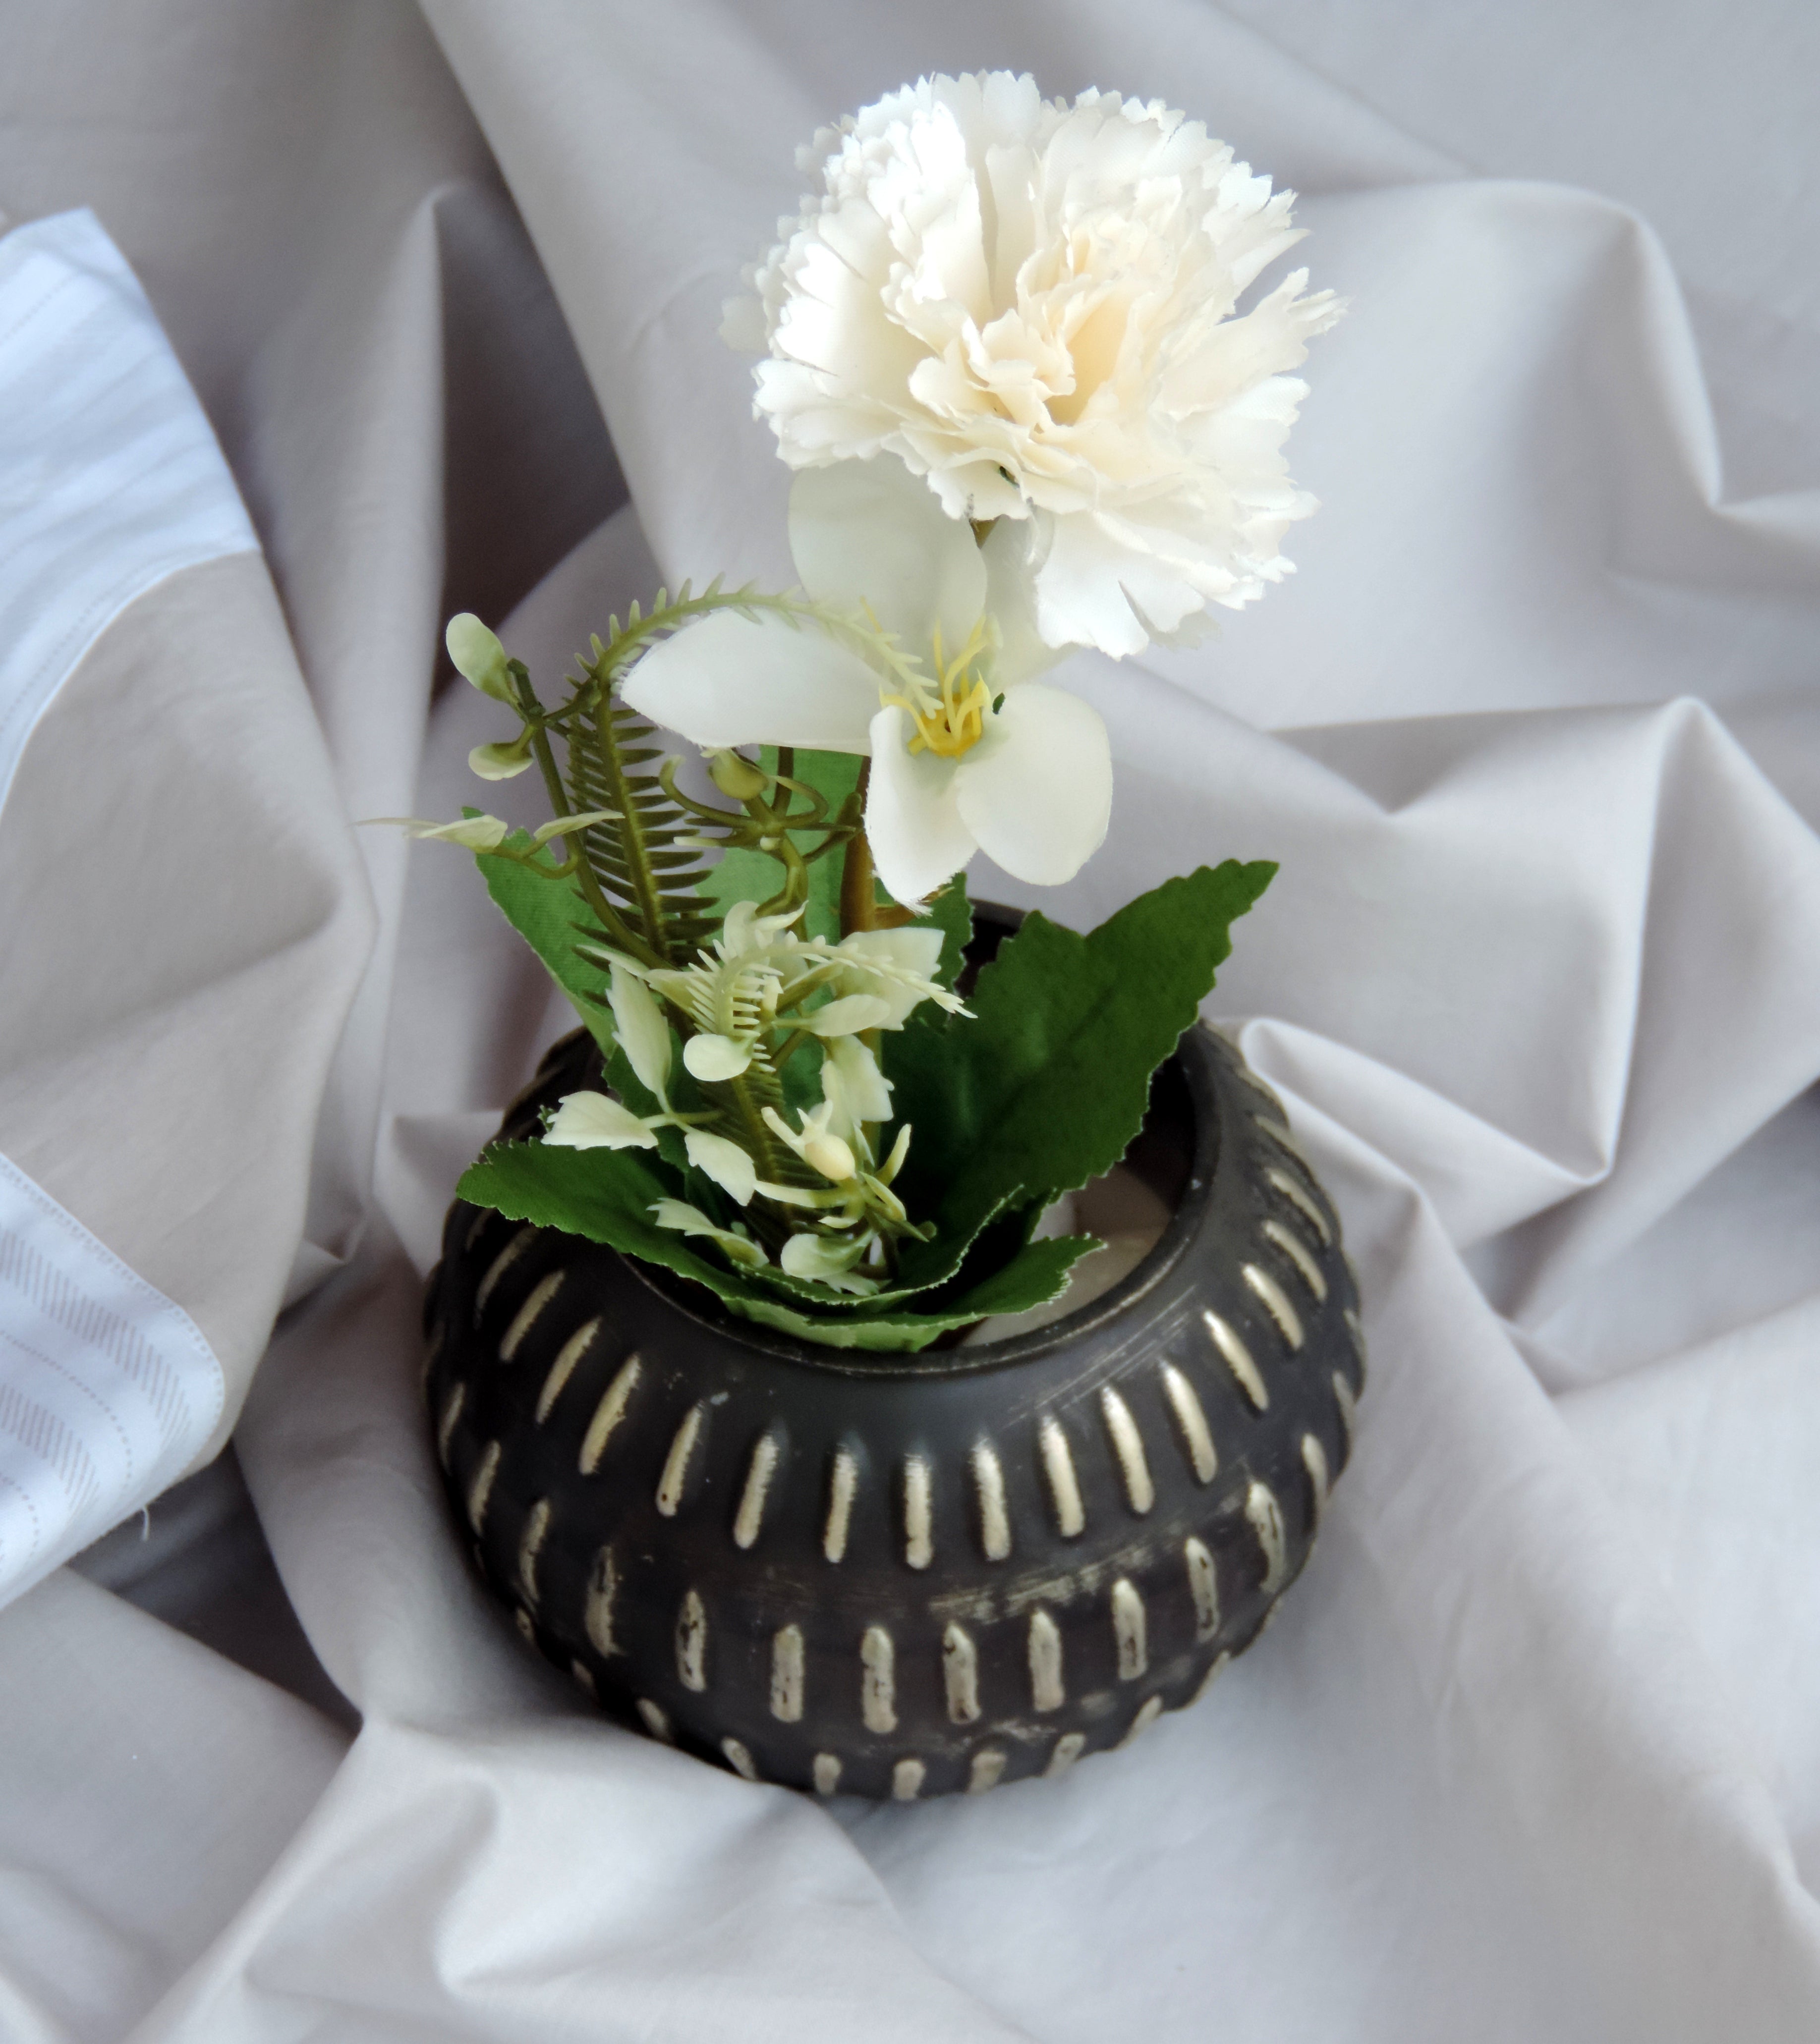 Bud Vase / Glass Vase for Wedding, Events Decorating, Arrangements, Flowers, Office or Home Decor / 4"x3.4"